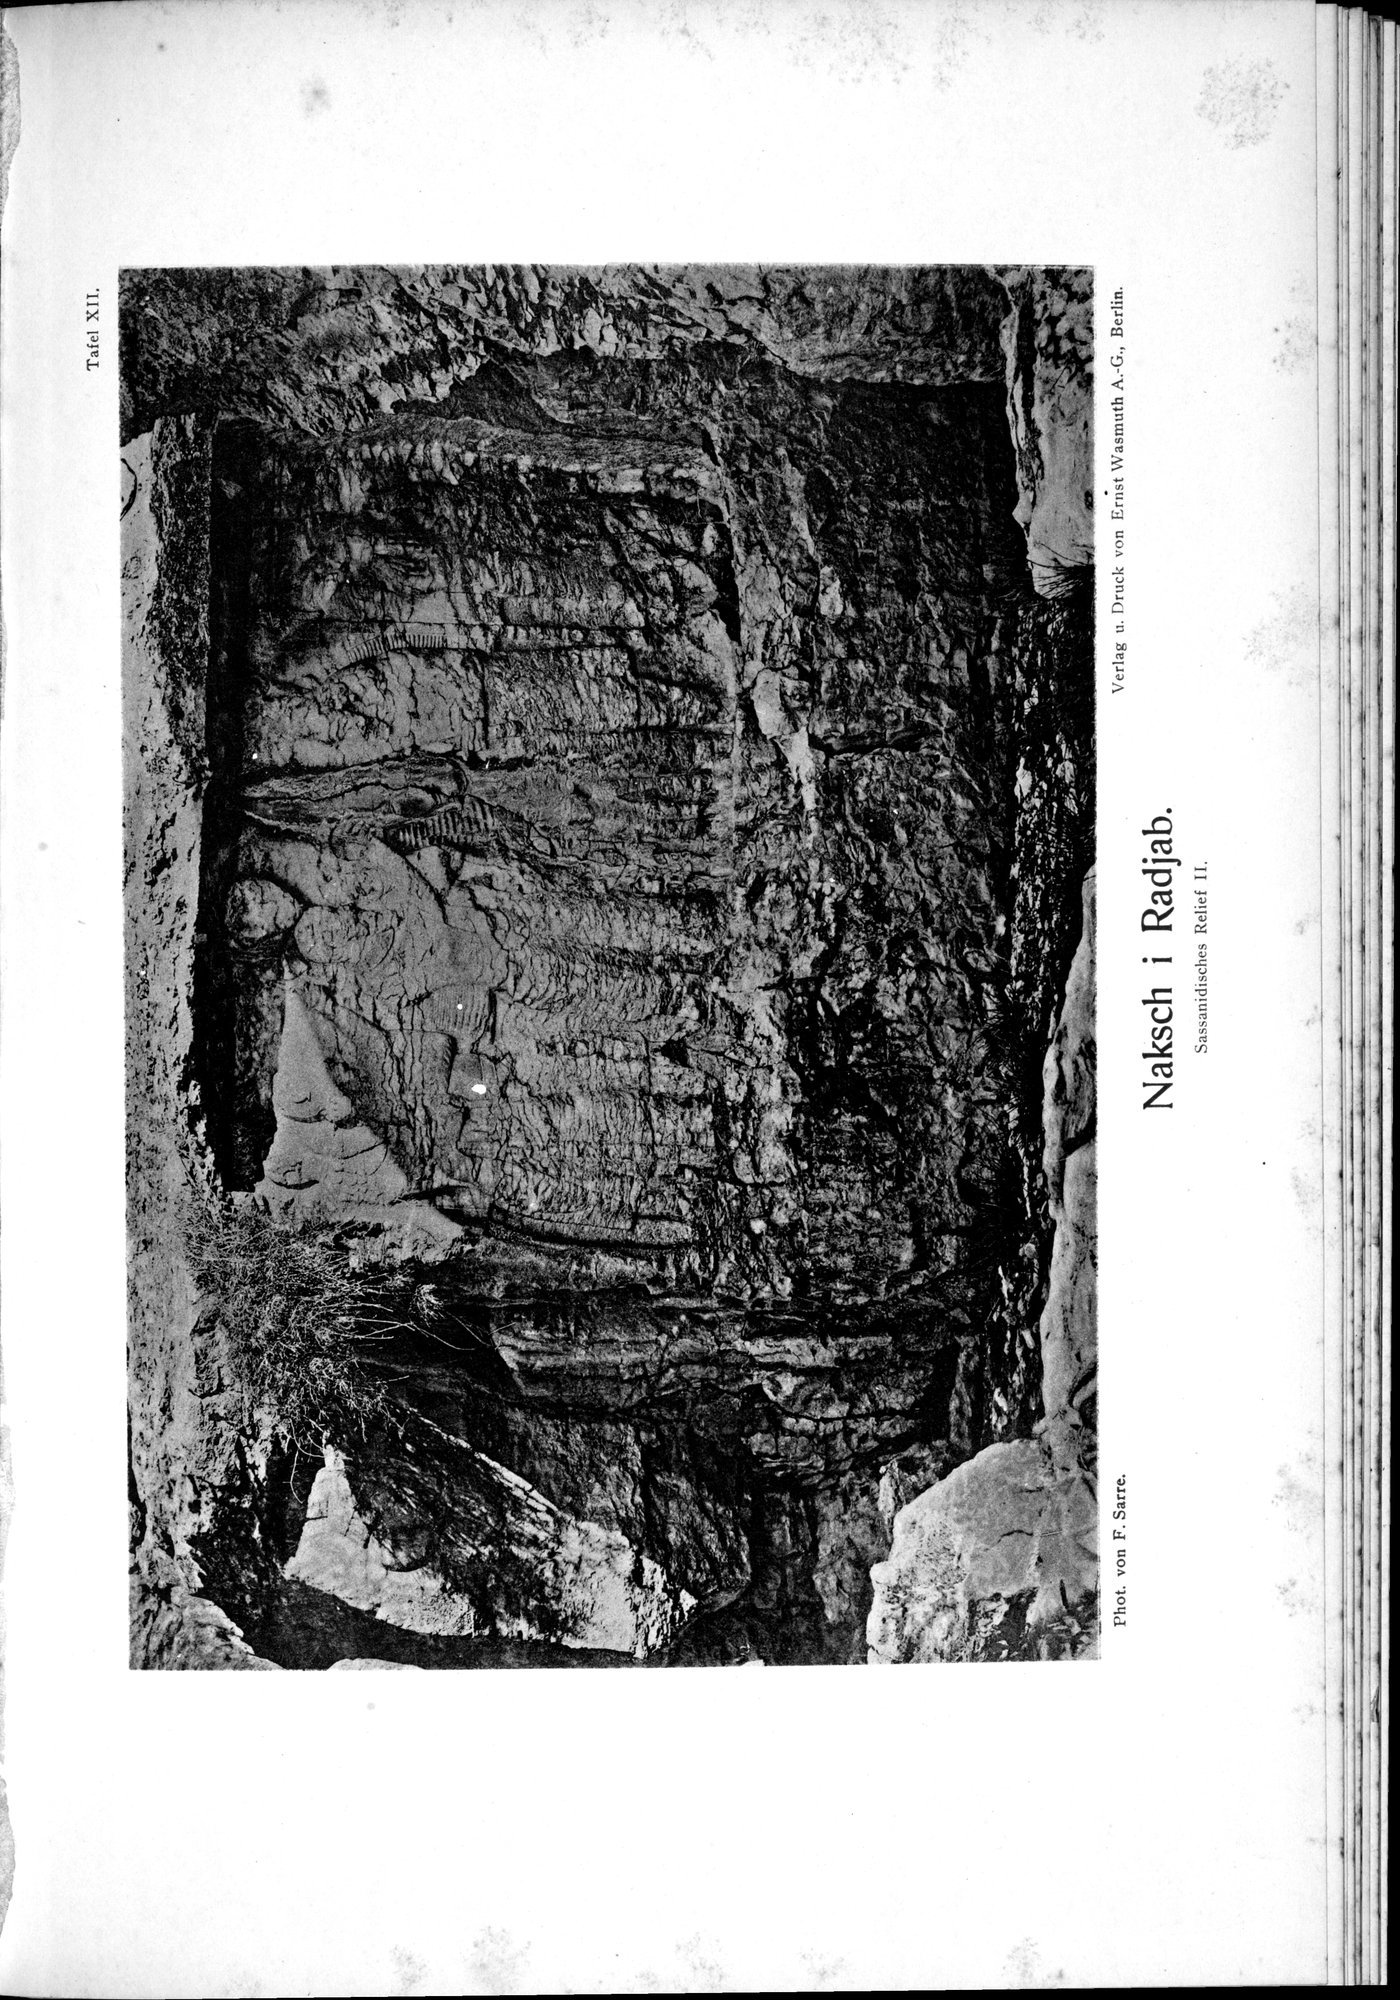 Iranische Felsreliefs : vol.1 / Page 306 (Grayscale High Resolution Image)